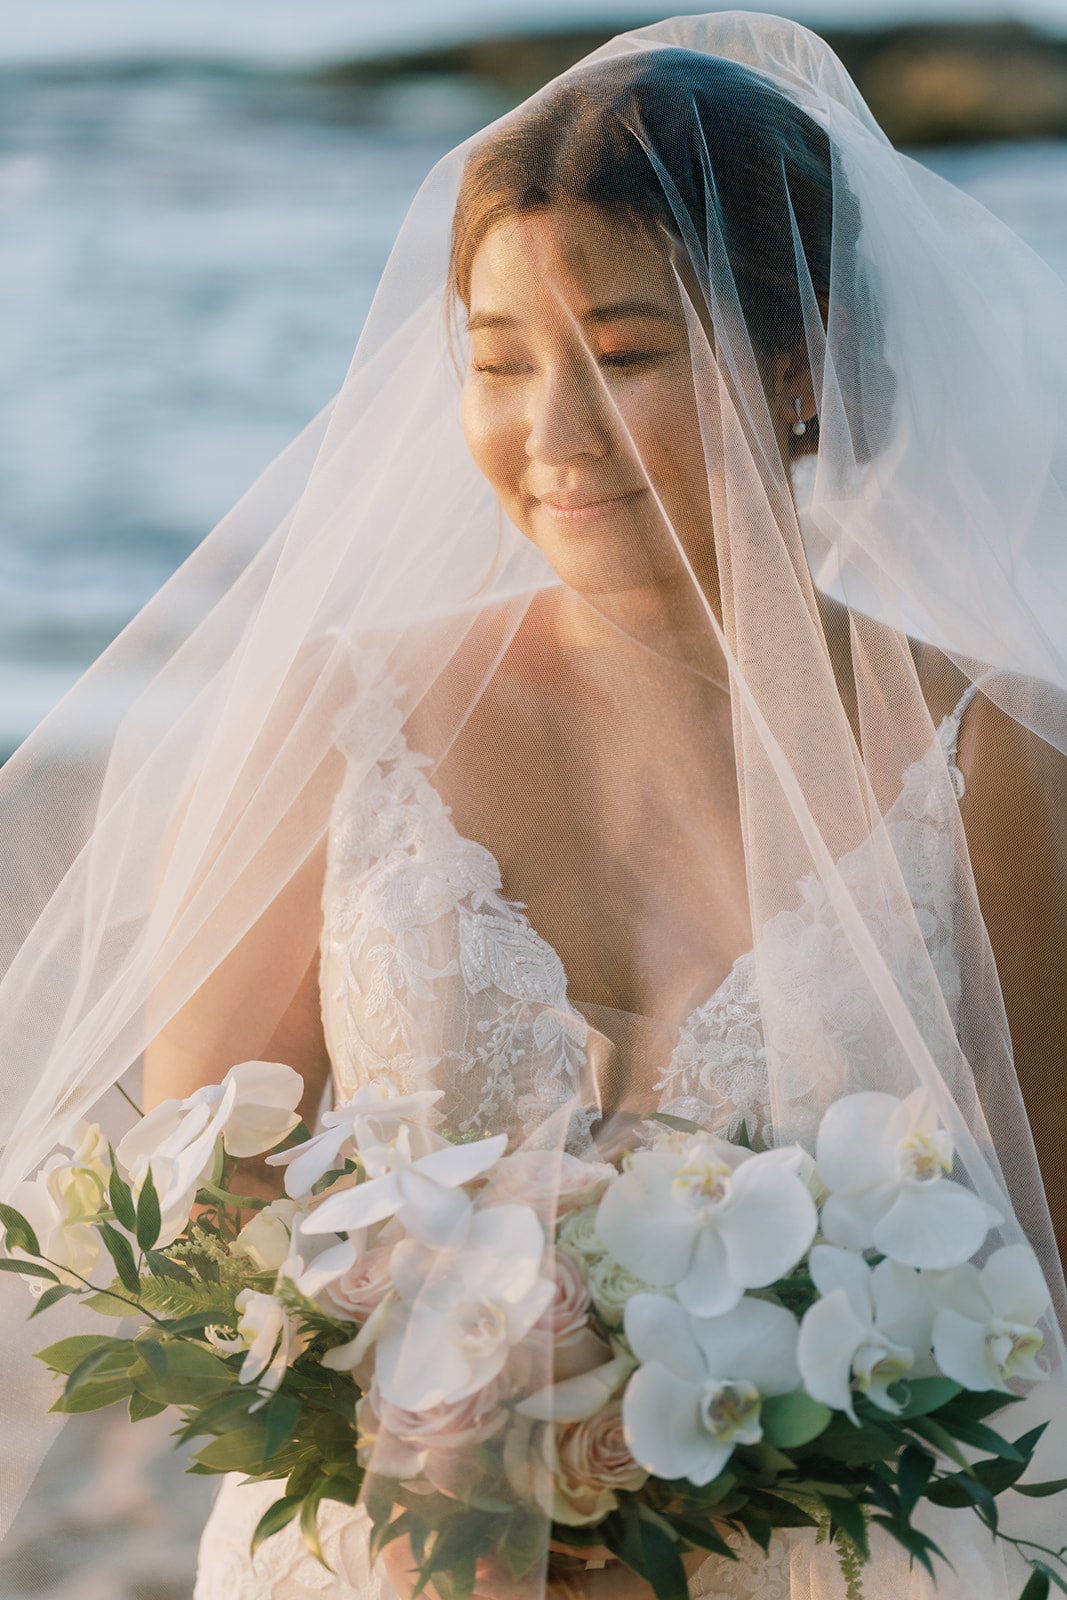 A bride wearing a wedding veil on the beach taken by Megan Moura Wedding Photographer.